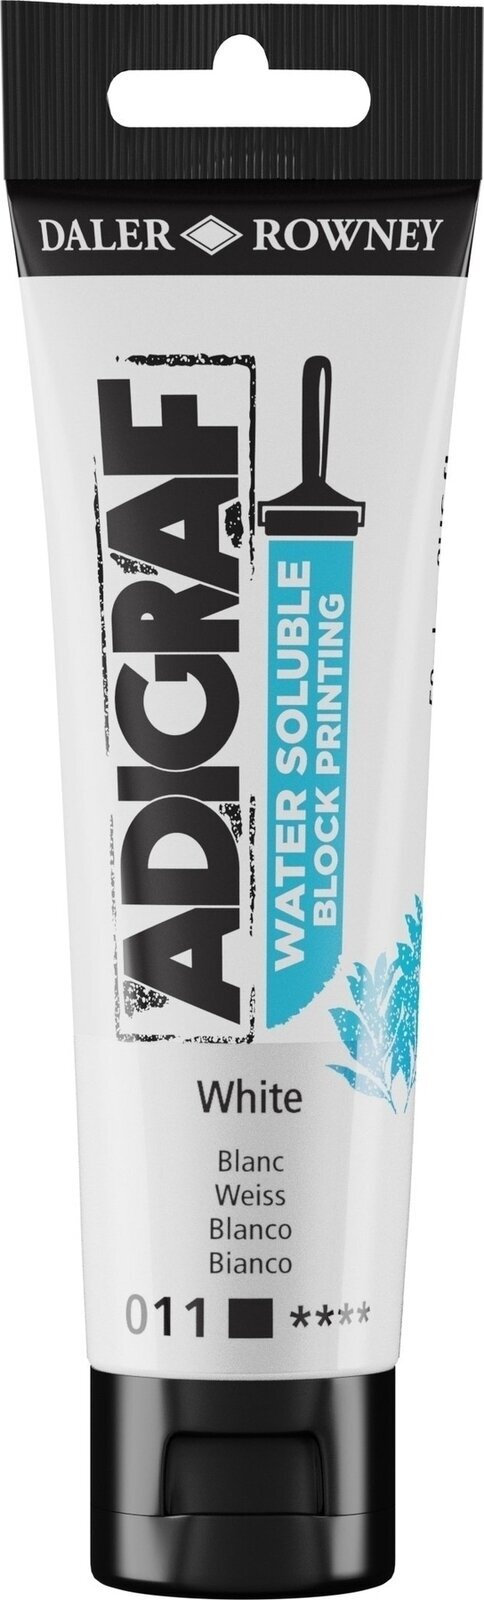 Vernice per linoleografia Daler Rowney Adigraf Block Printing Water Soluble Colour Vernice per linoleografia White 59 ml